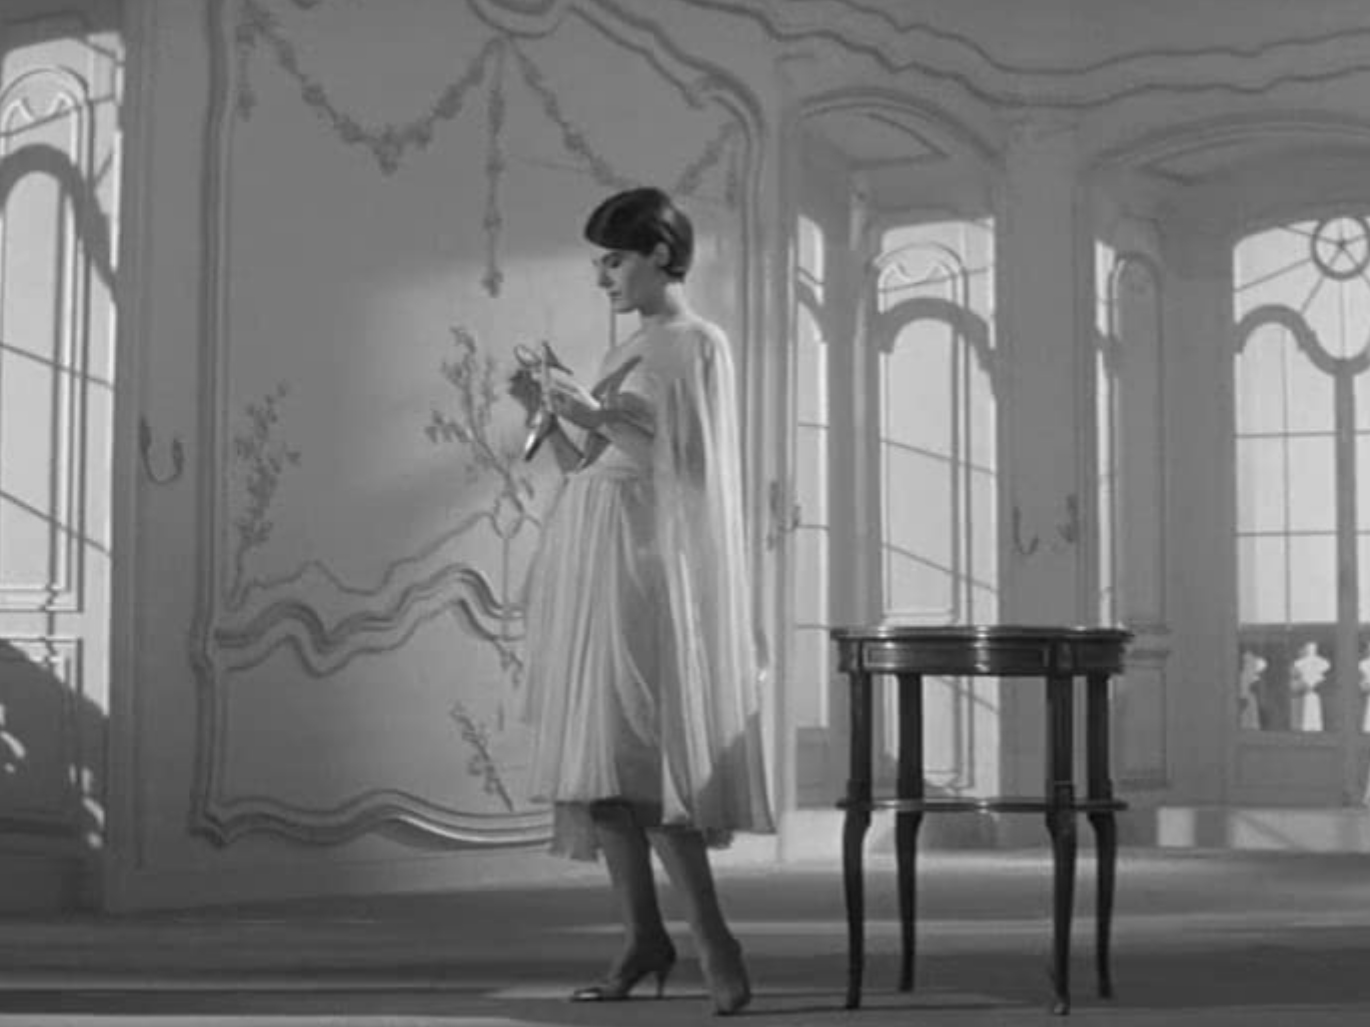 Delphine Seyrig in "Last Year at Marienbad" (1961)